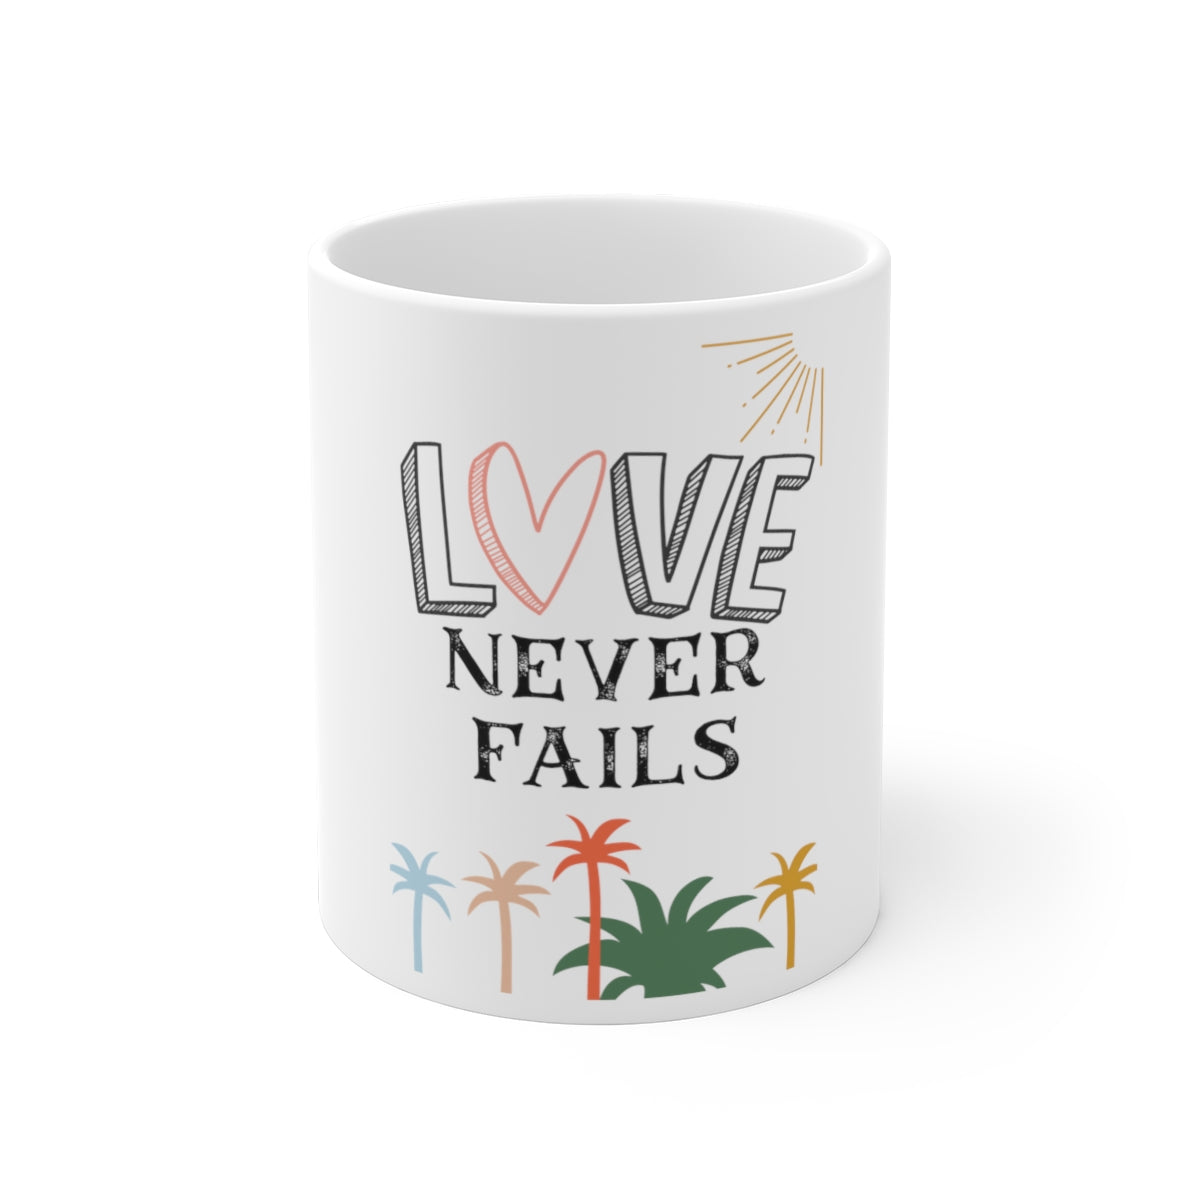 Love never fails mug